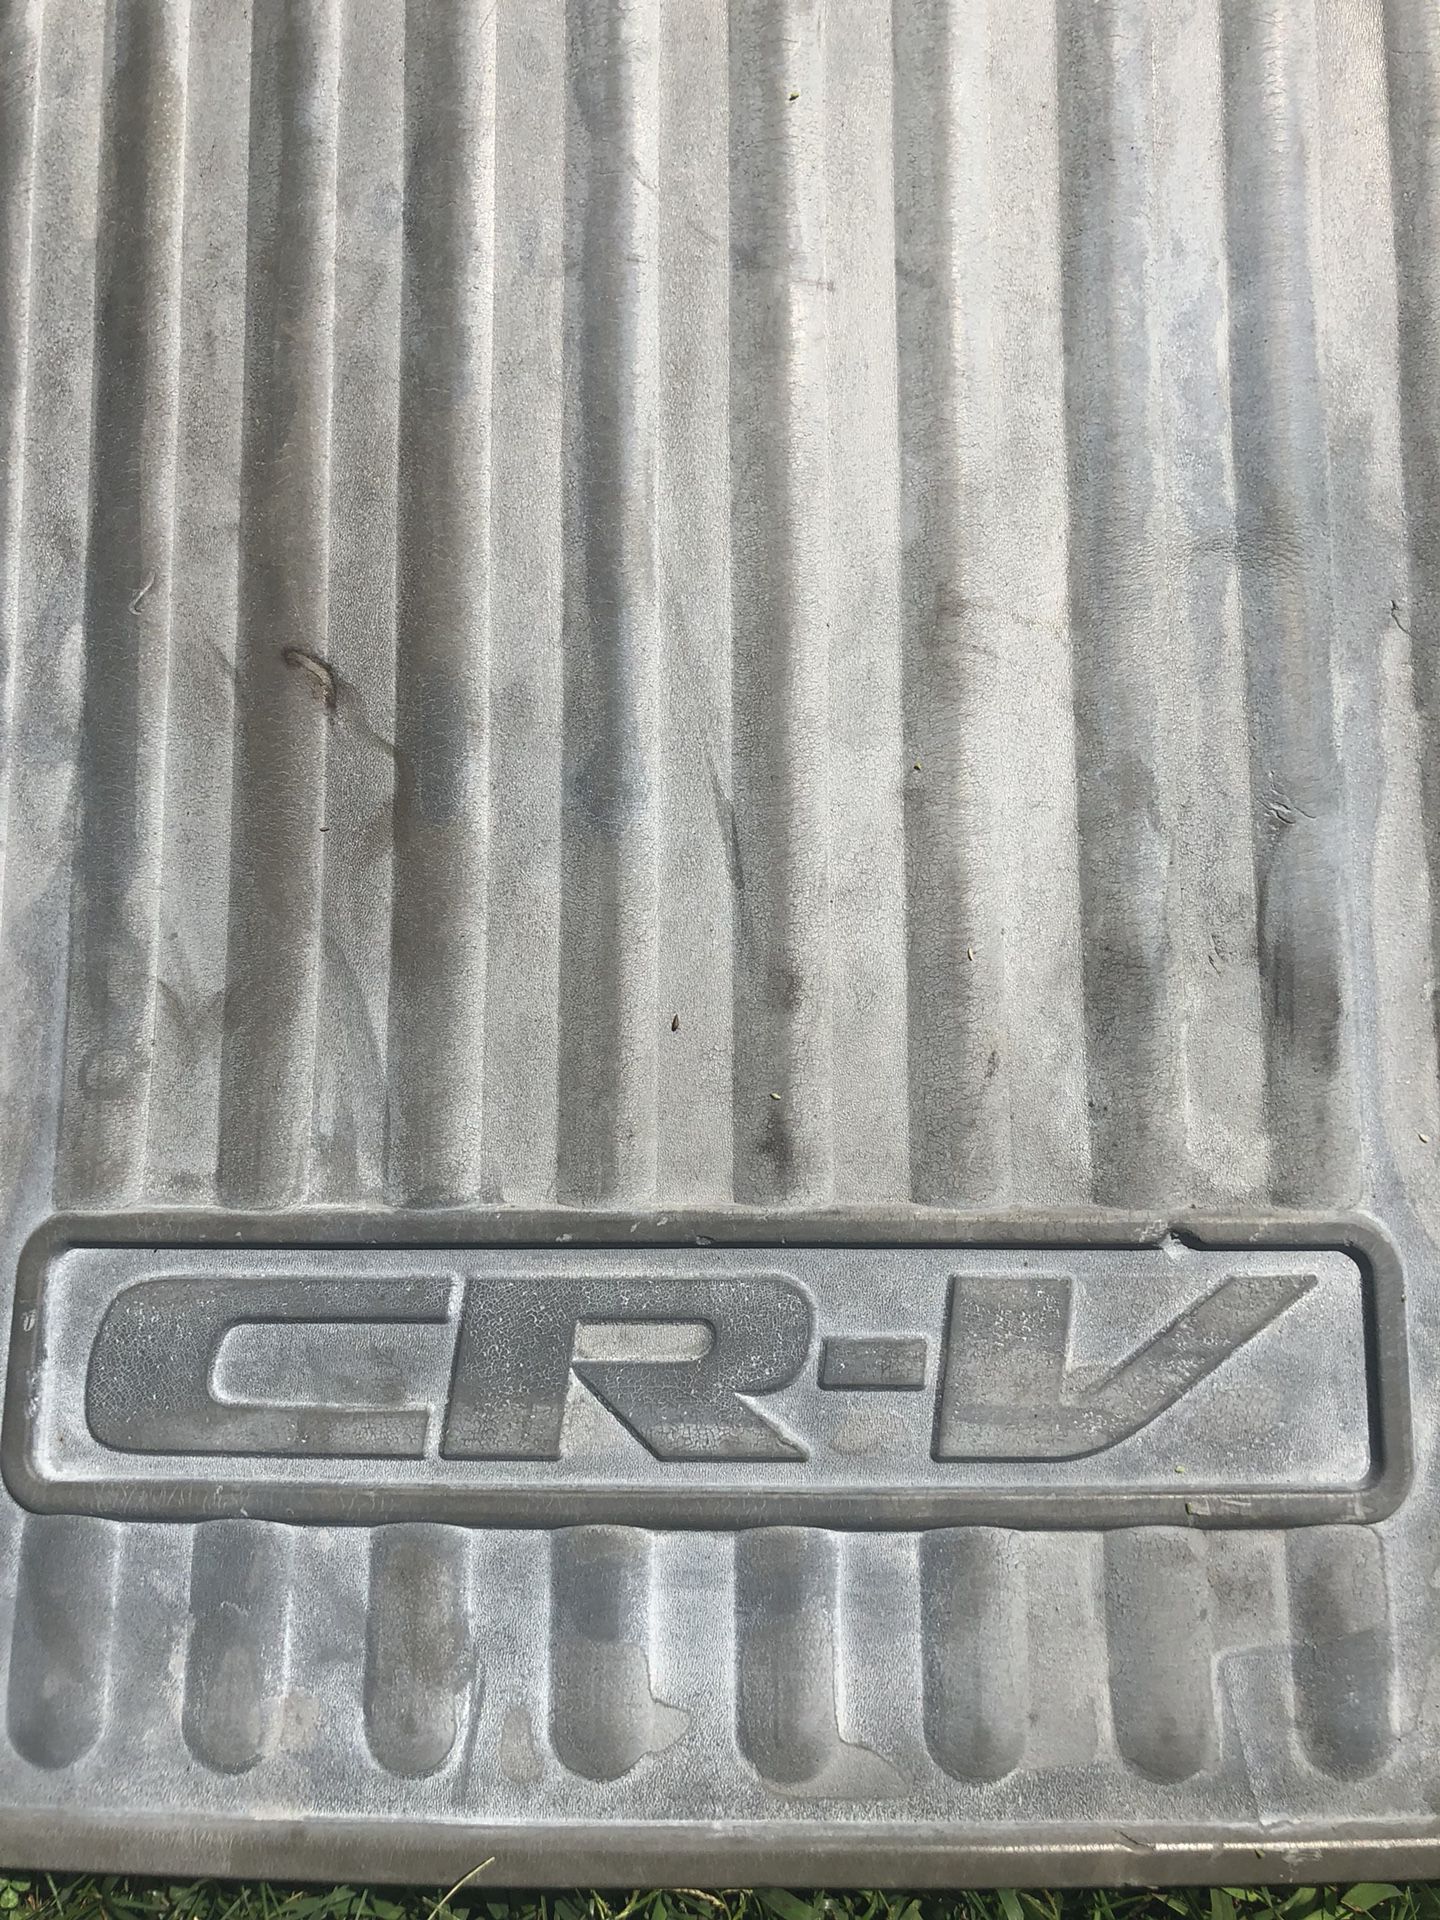 Honda CR-V OEM Cargo Mat 1997-2001.